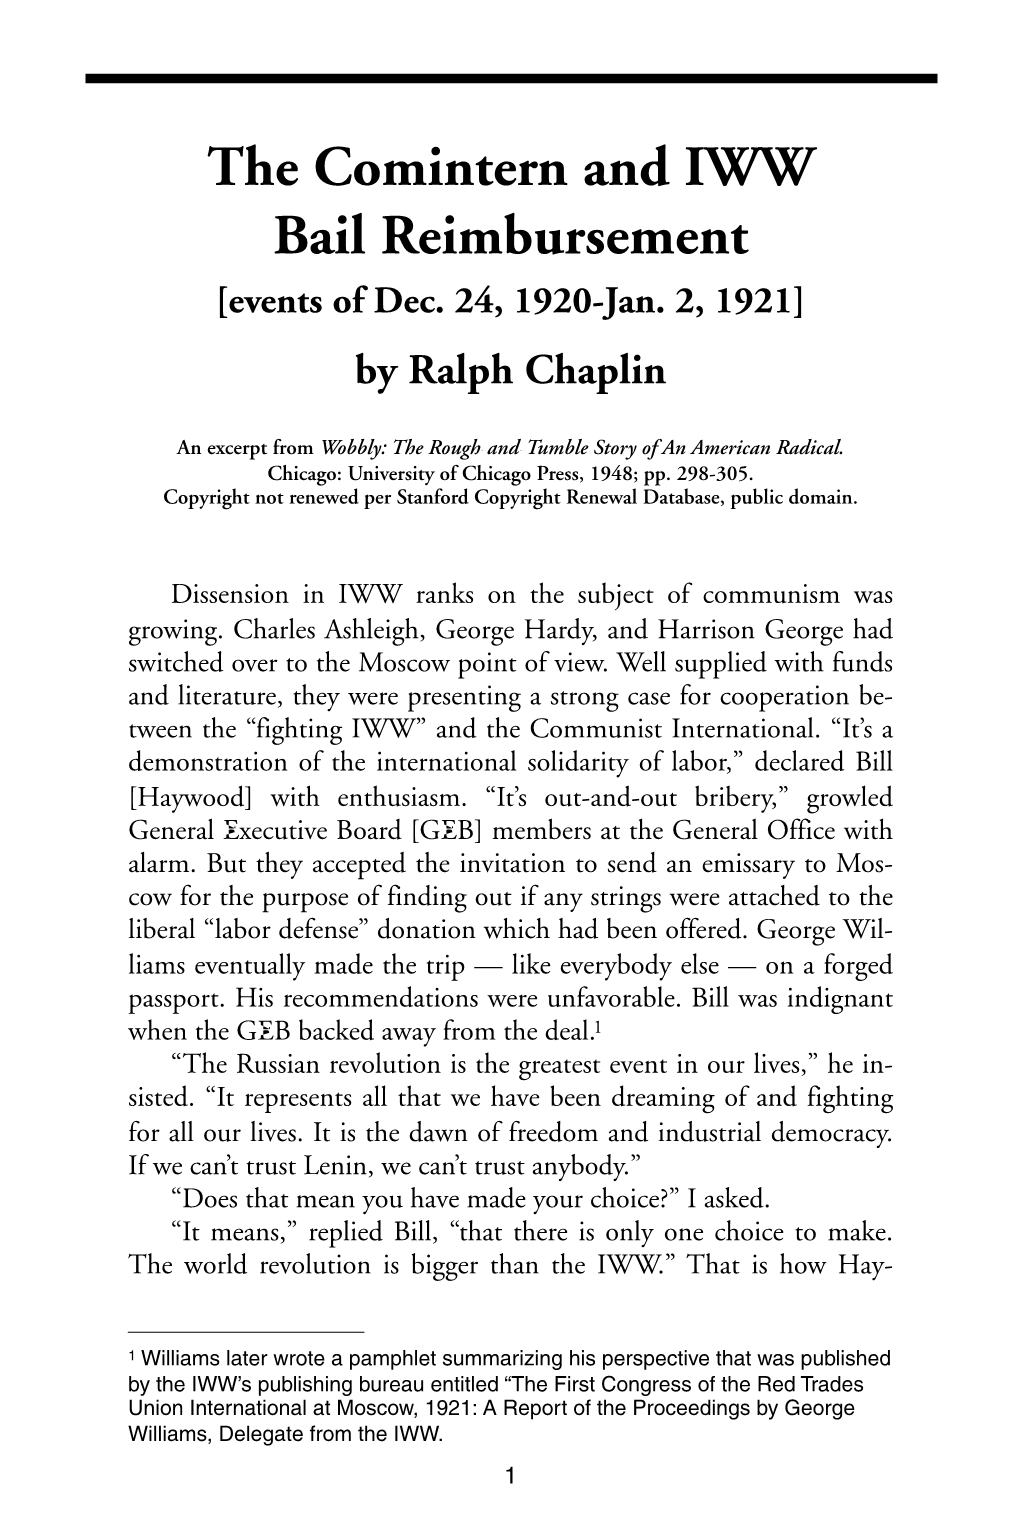 The Comintern and IWW Bail Reimbursement [Events of Dec